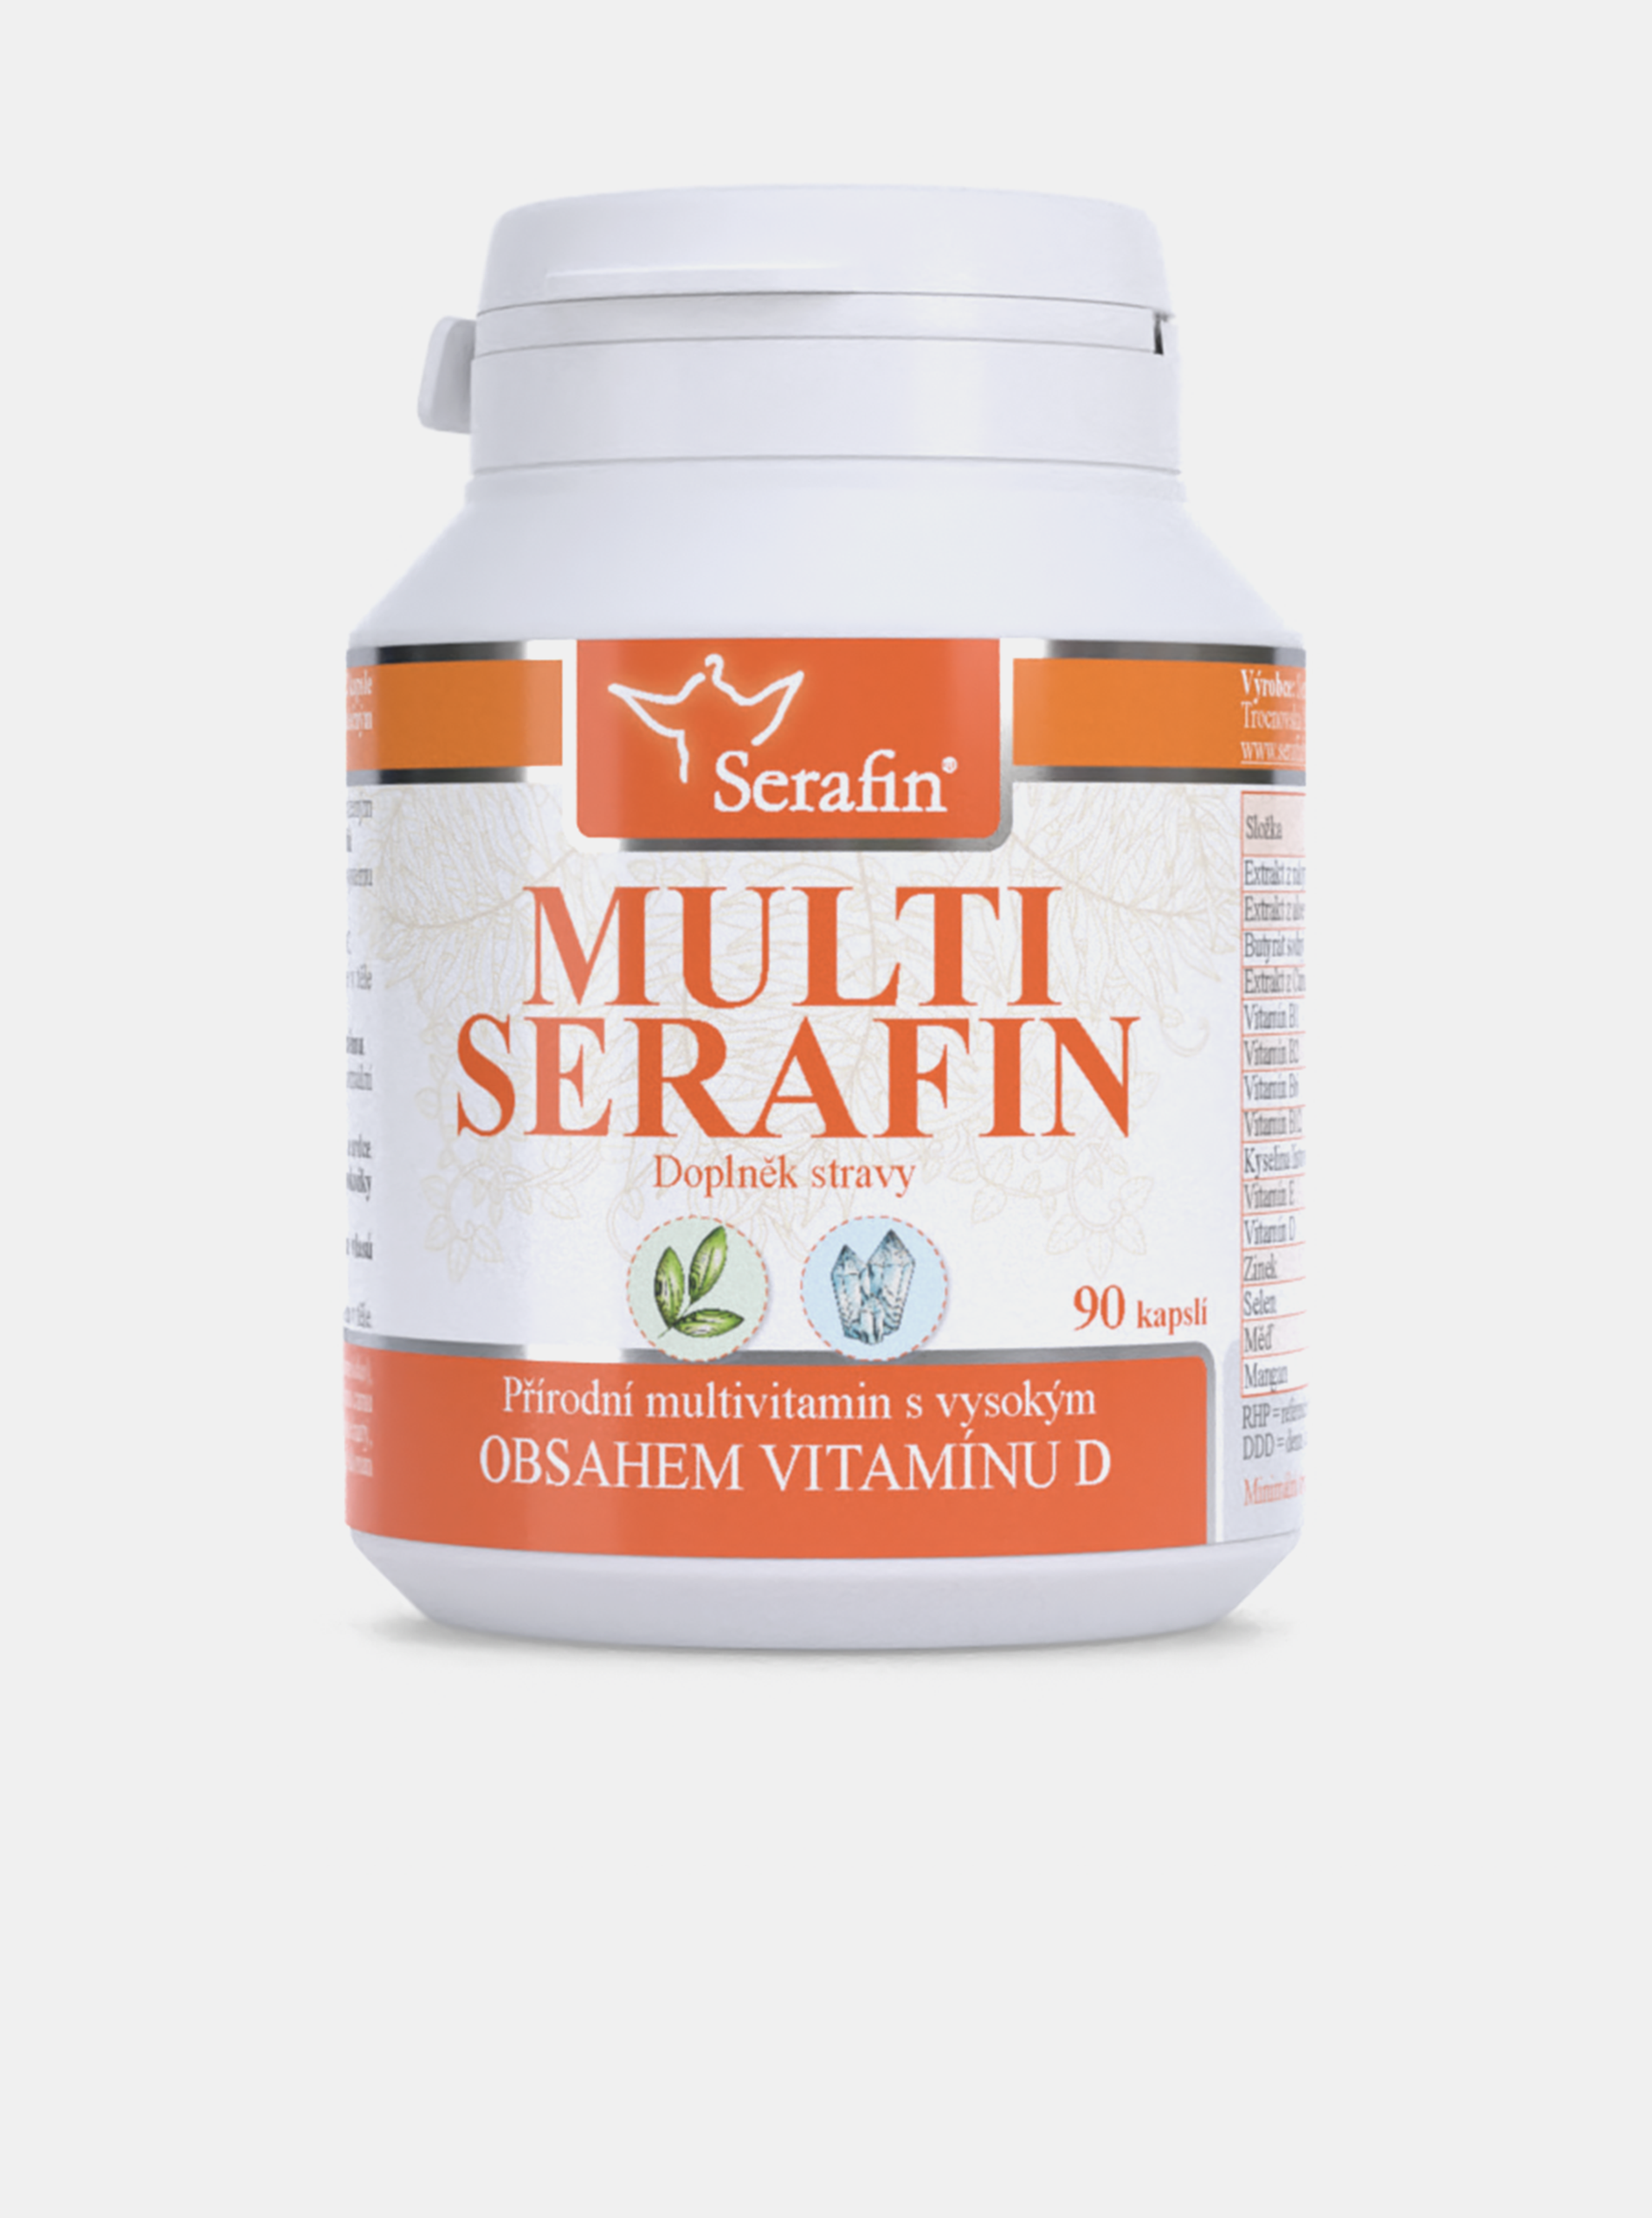 Fotografie Multiserafin s vitamínem D Serafin (90 kapslí)